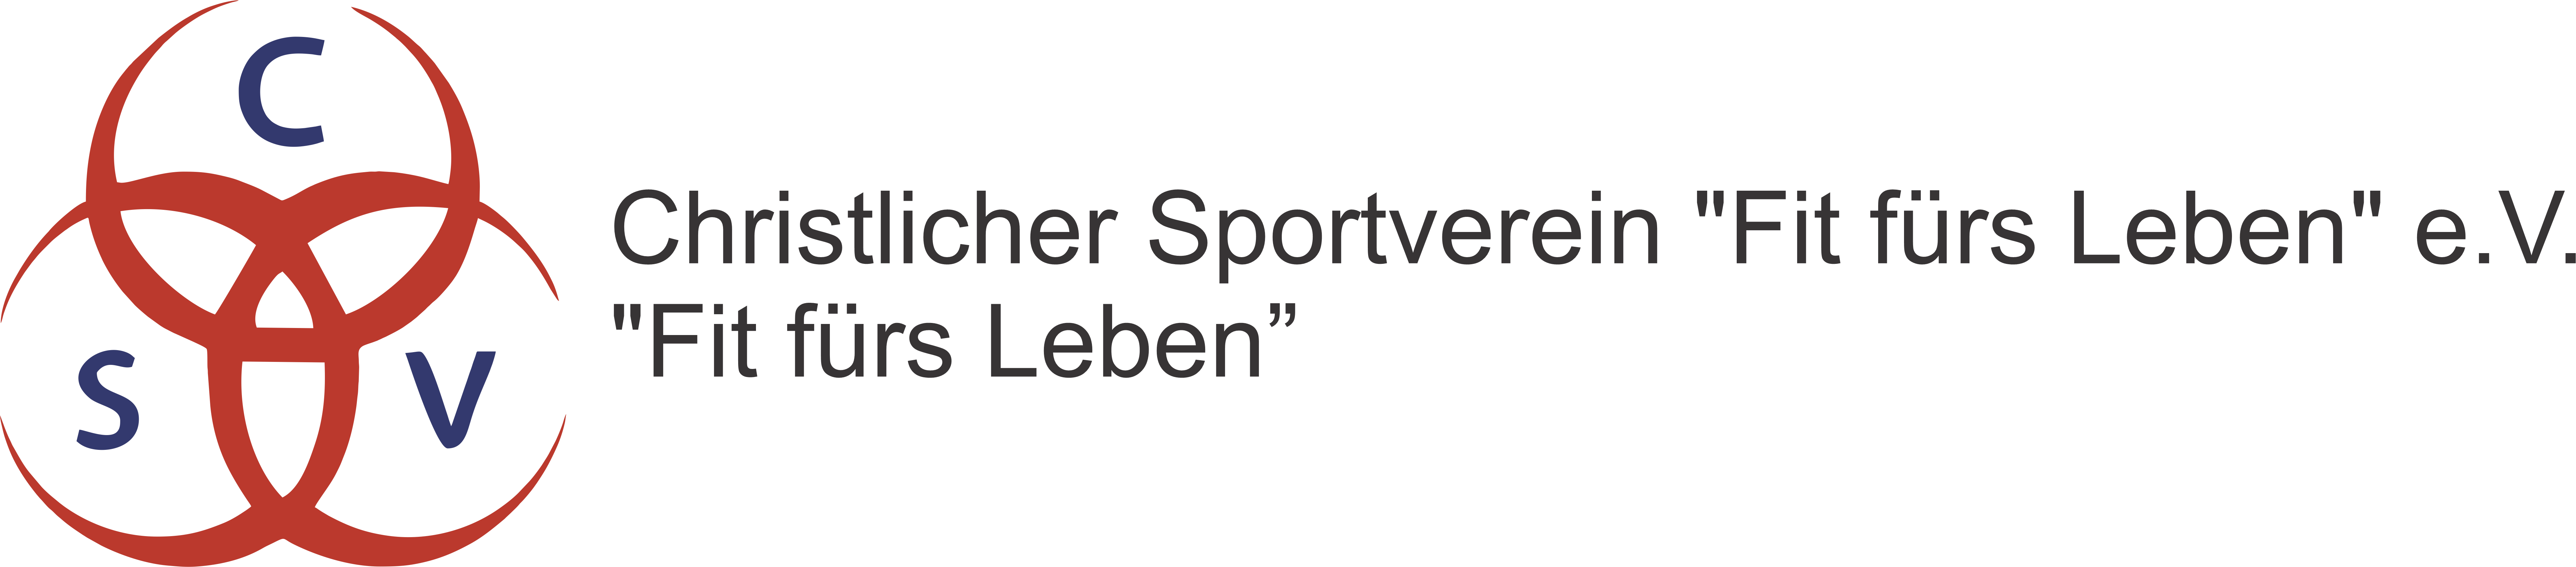 Christlicher Sportverein "Fit fürs Leben" e.V.